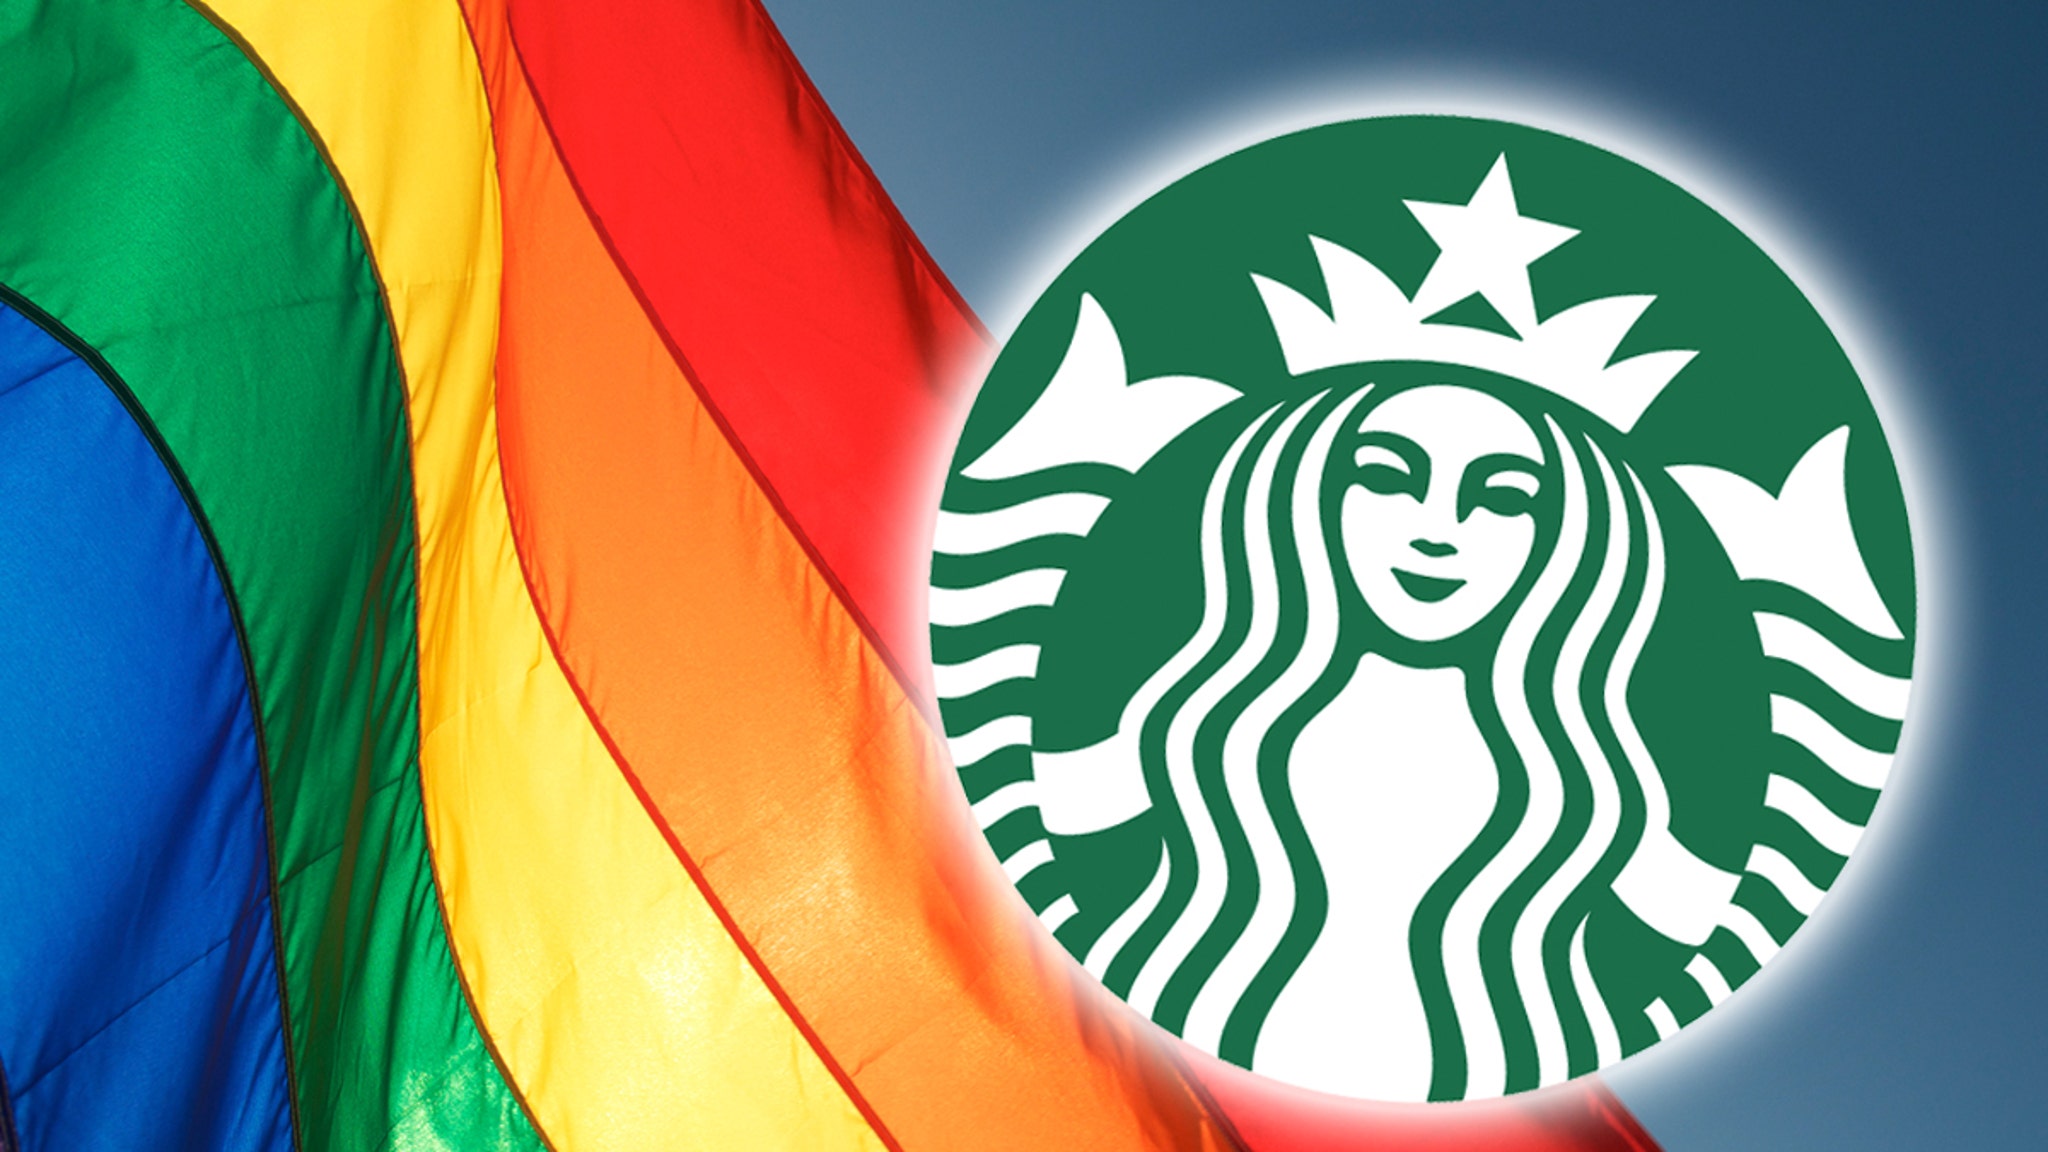 Работники Starbucks проведут забастовку в знак протеста против предполагаемого запрета декора прайда